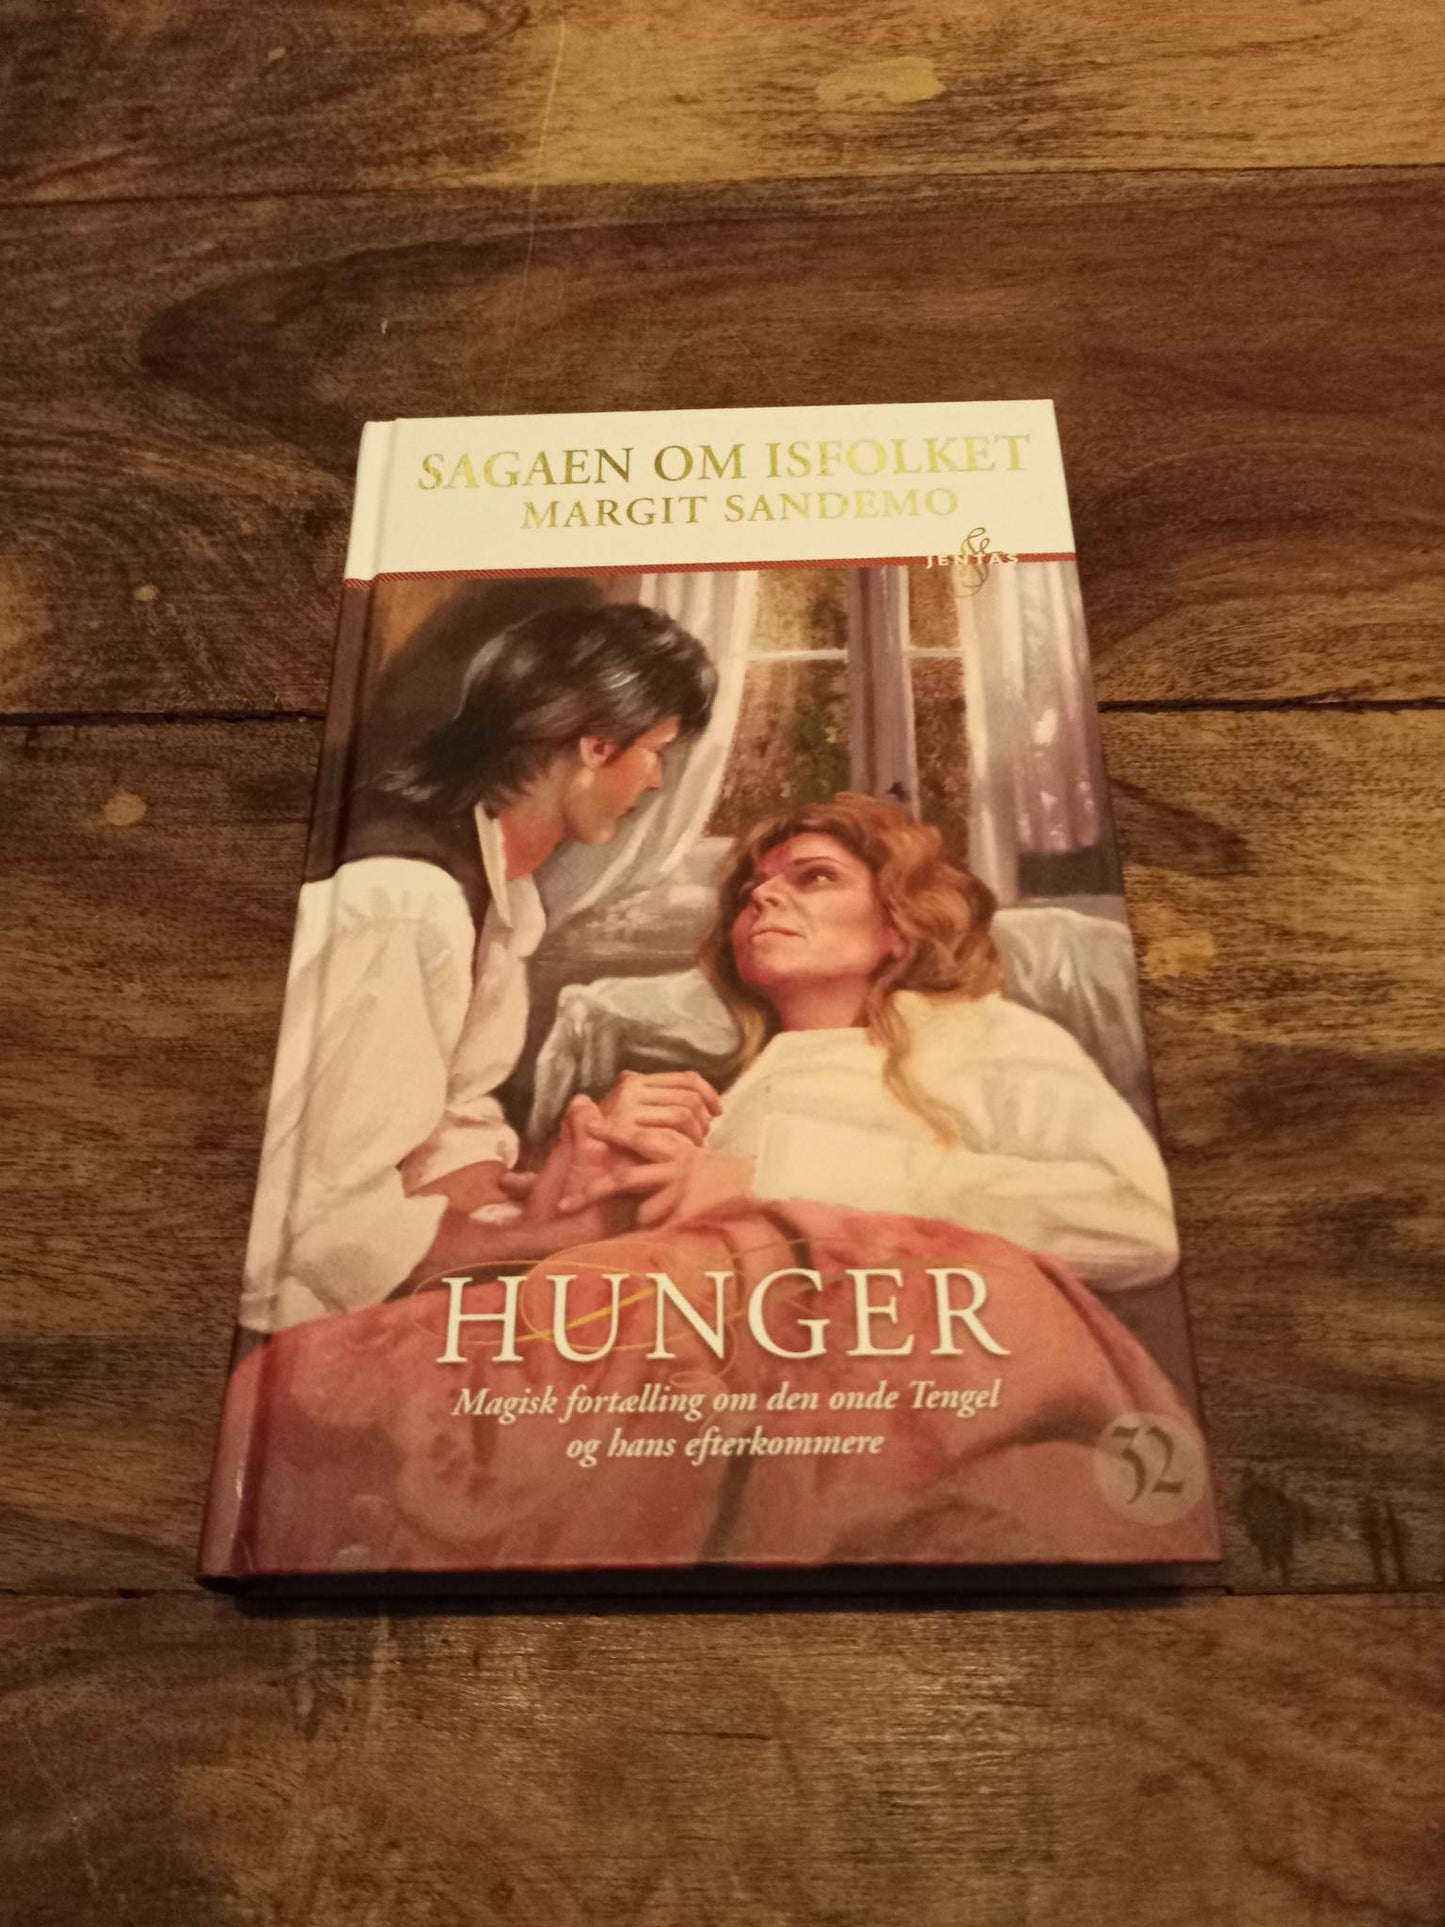 Hunger Isfolket # 32 Sagaen om Isfolket Hardcover Margit Sandemo 2009